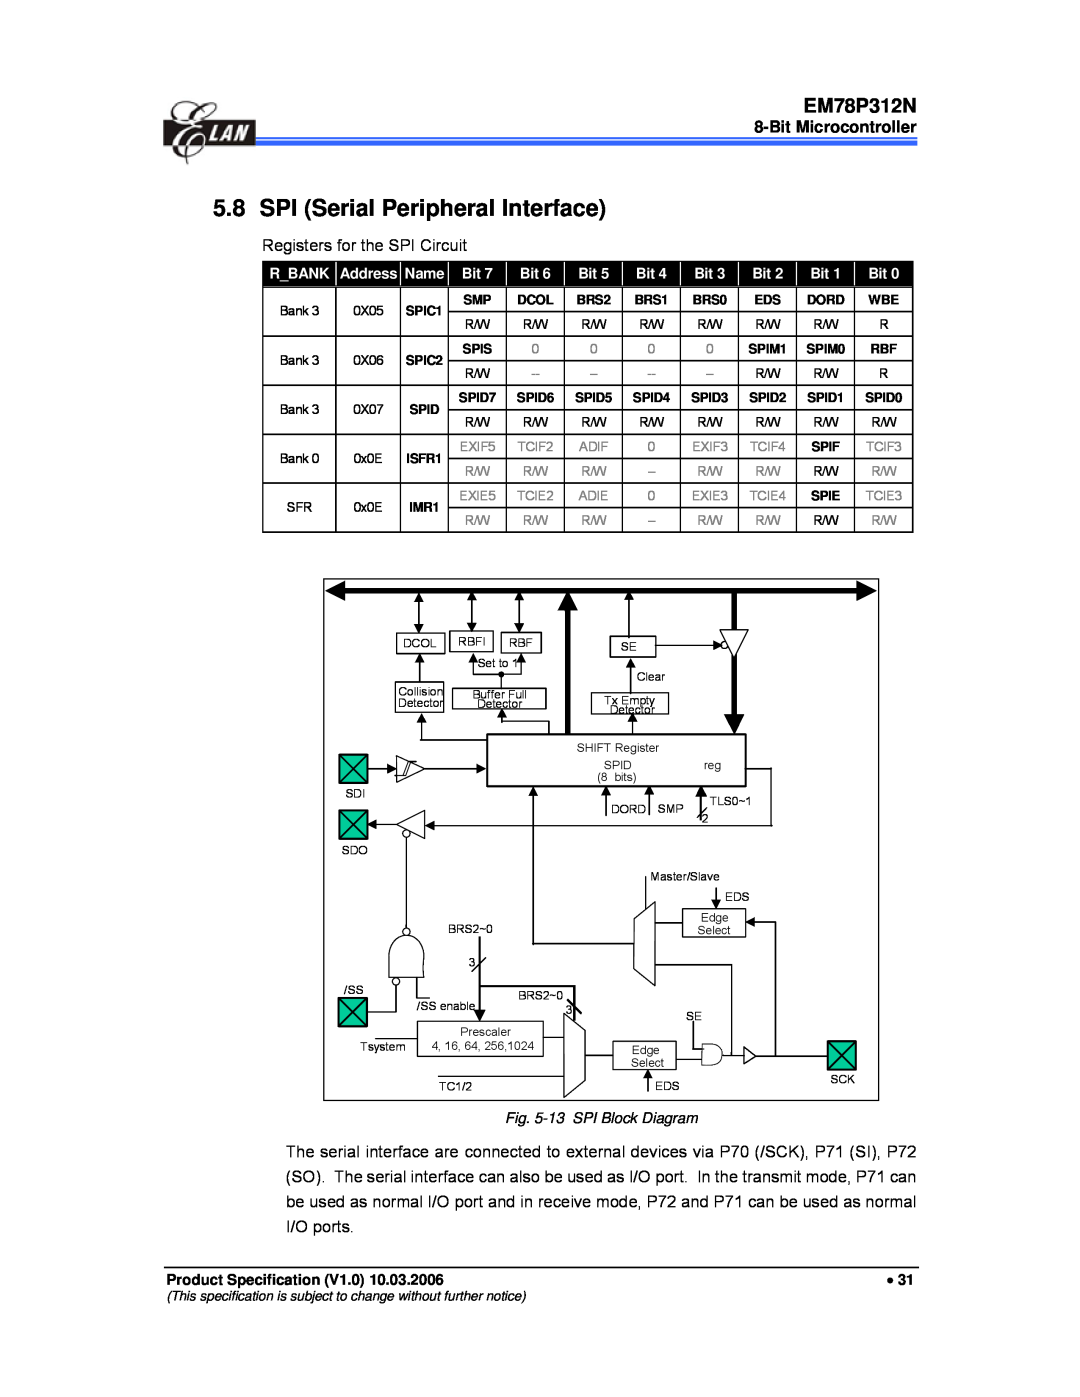 IBM EM78P312N manual SPI Serial Peripheral Interface, Bit Microcontroller, 13 SPI Block Diagram 